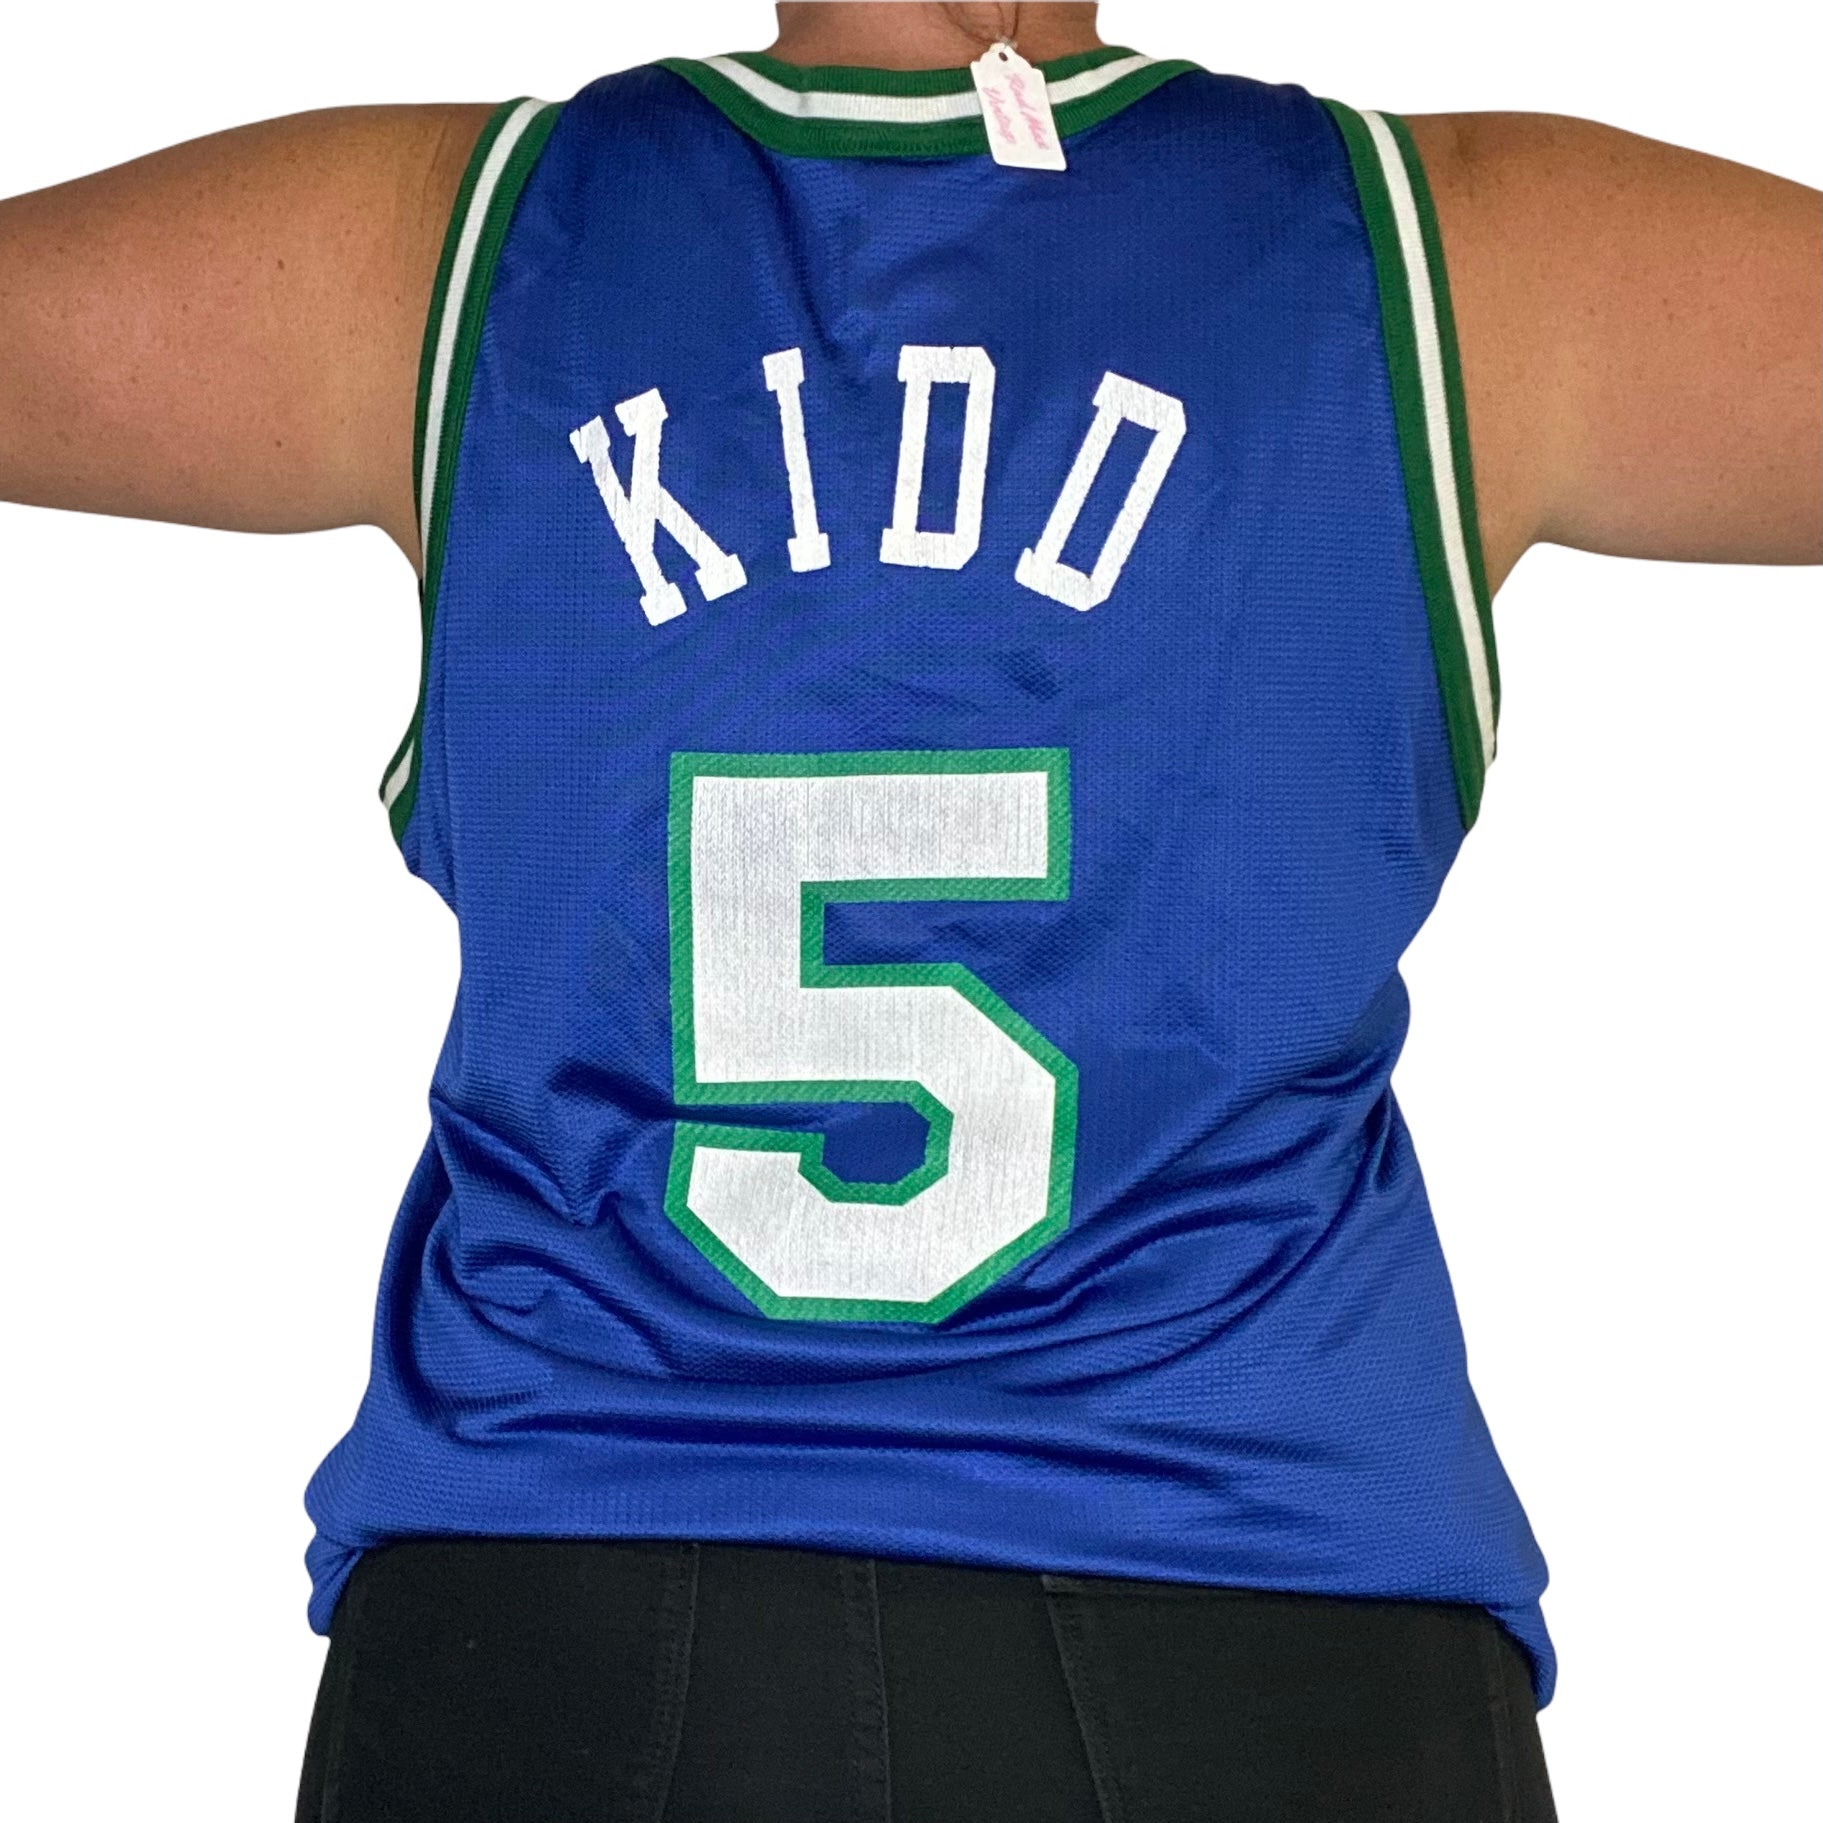 90's Jason Kidd Phoenix Suns Champion NBA Jersey Size 40 – Rare VNTG